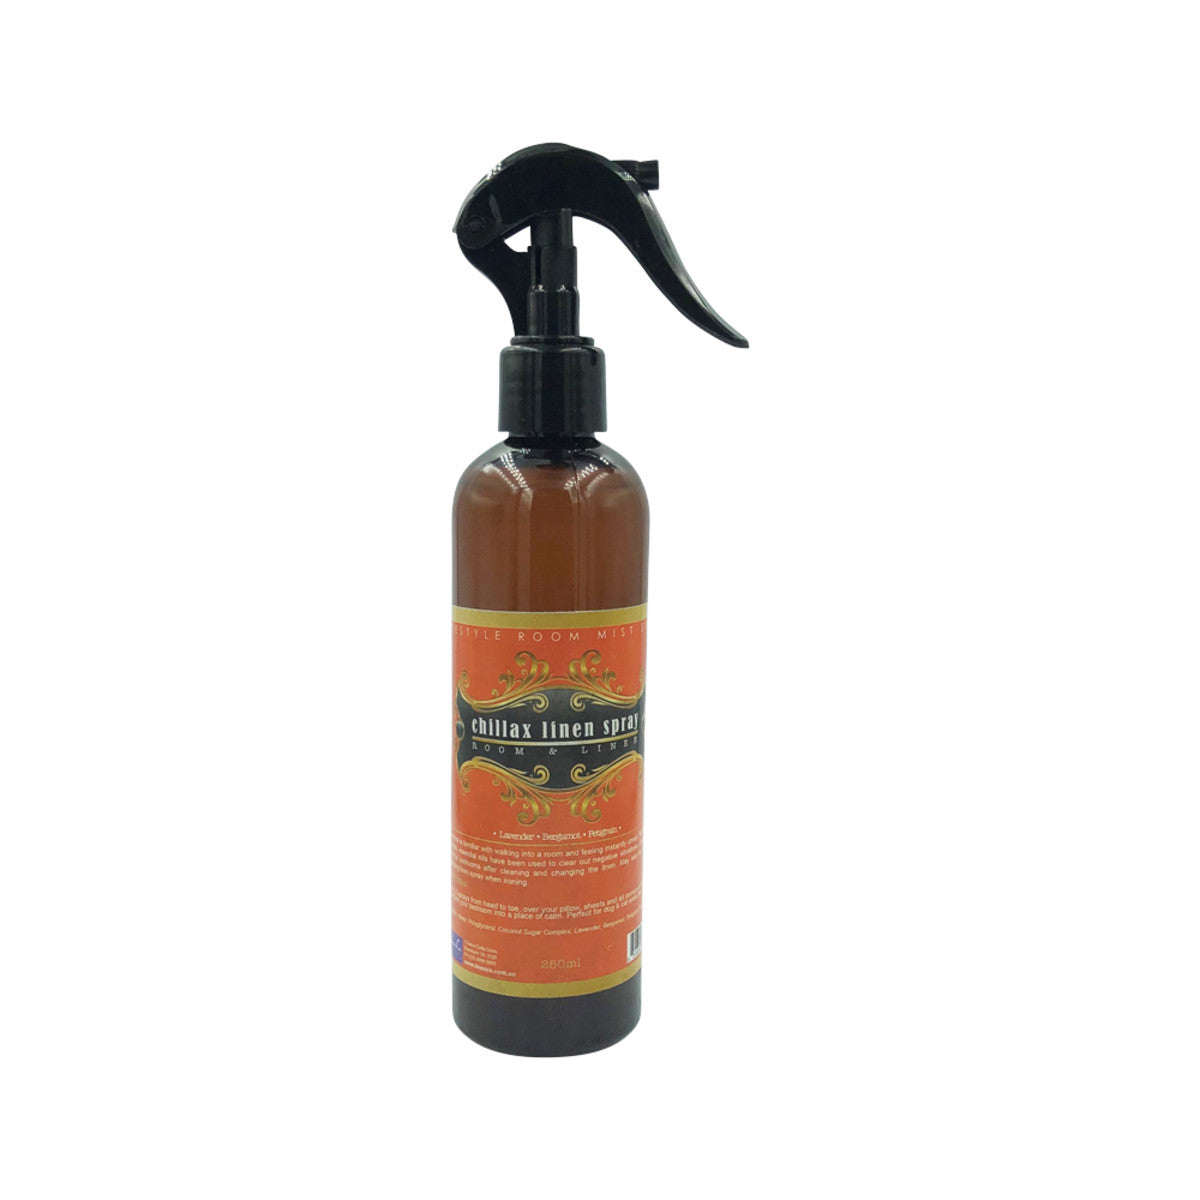 SaltCo Lifestyle Room Mist Chillax Linen Spray 250ml